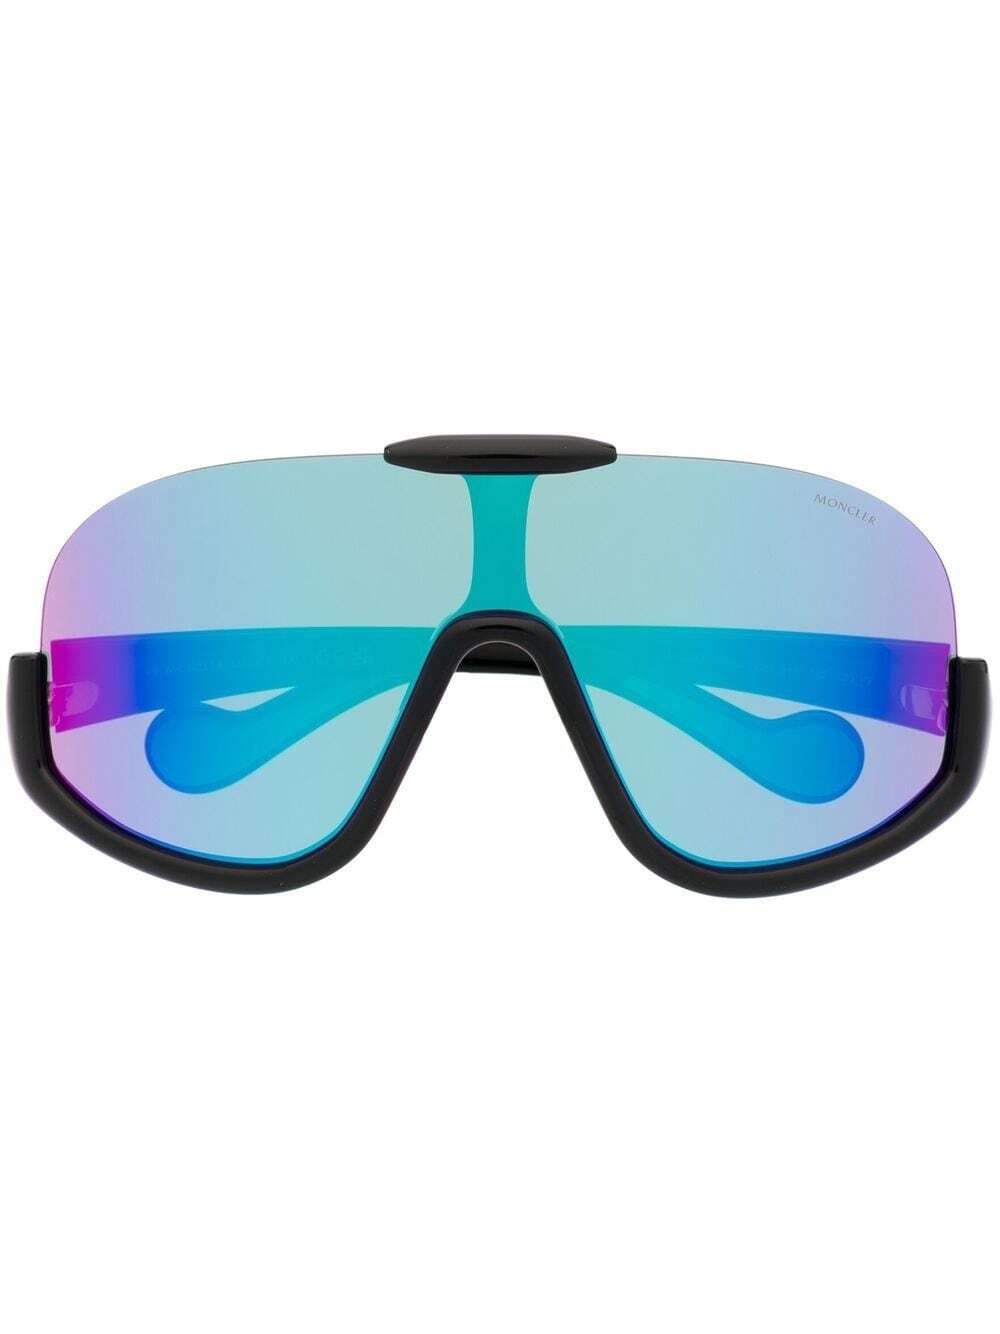 Moncler Eyewear shield-frame sunglasses - Black